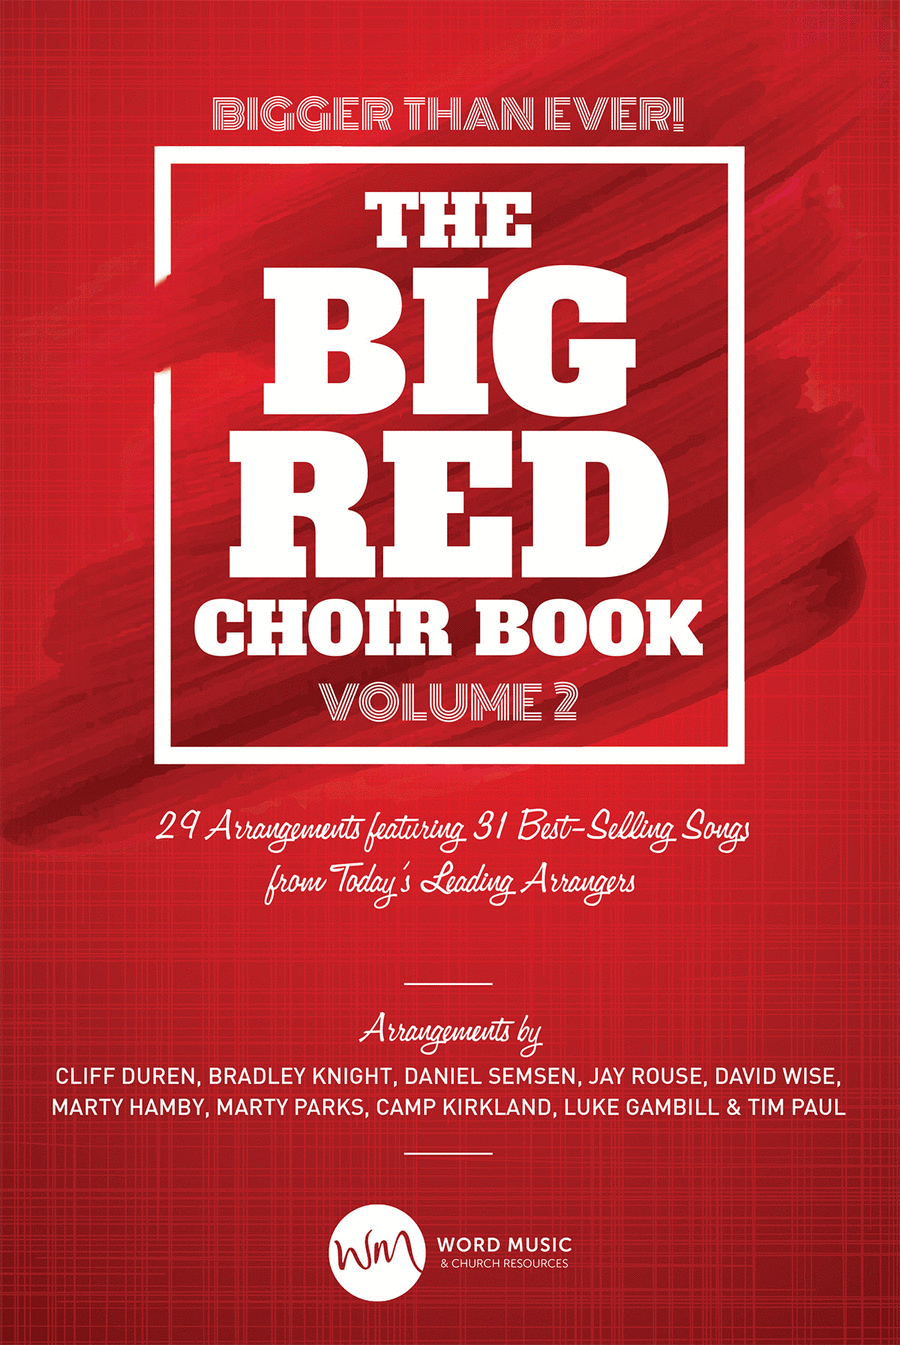 The Big Red Choir Book, Volume 2 - CD Preview Pak